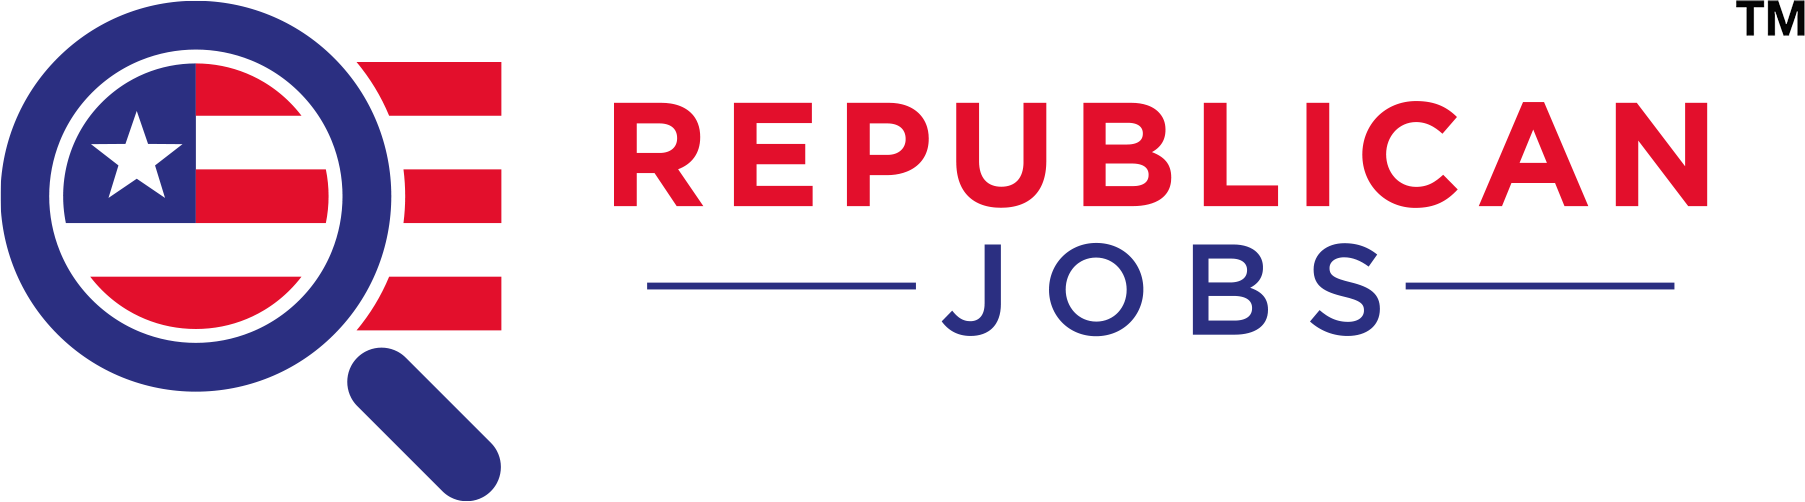 Republican jobs in Costa Mesa California jobs